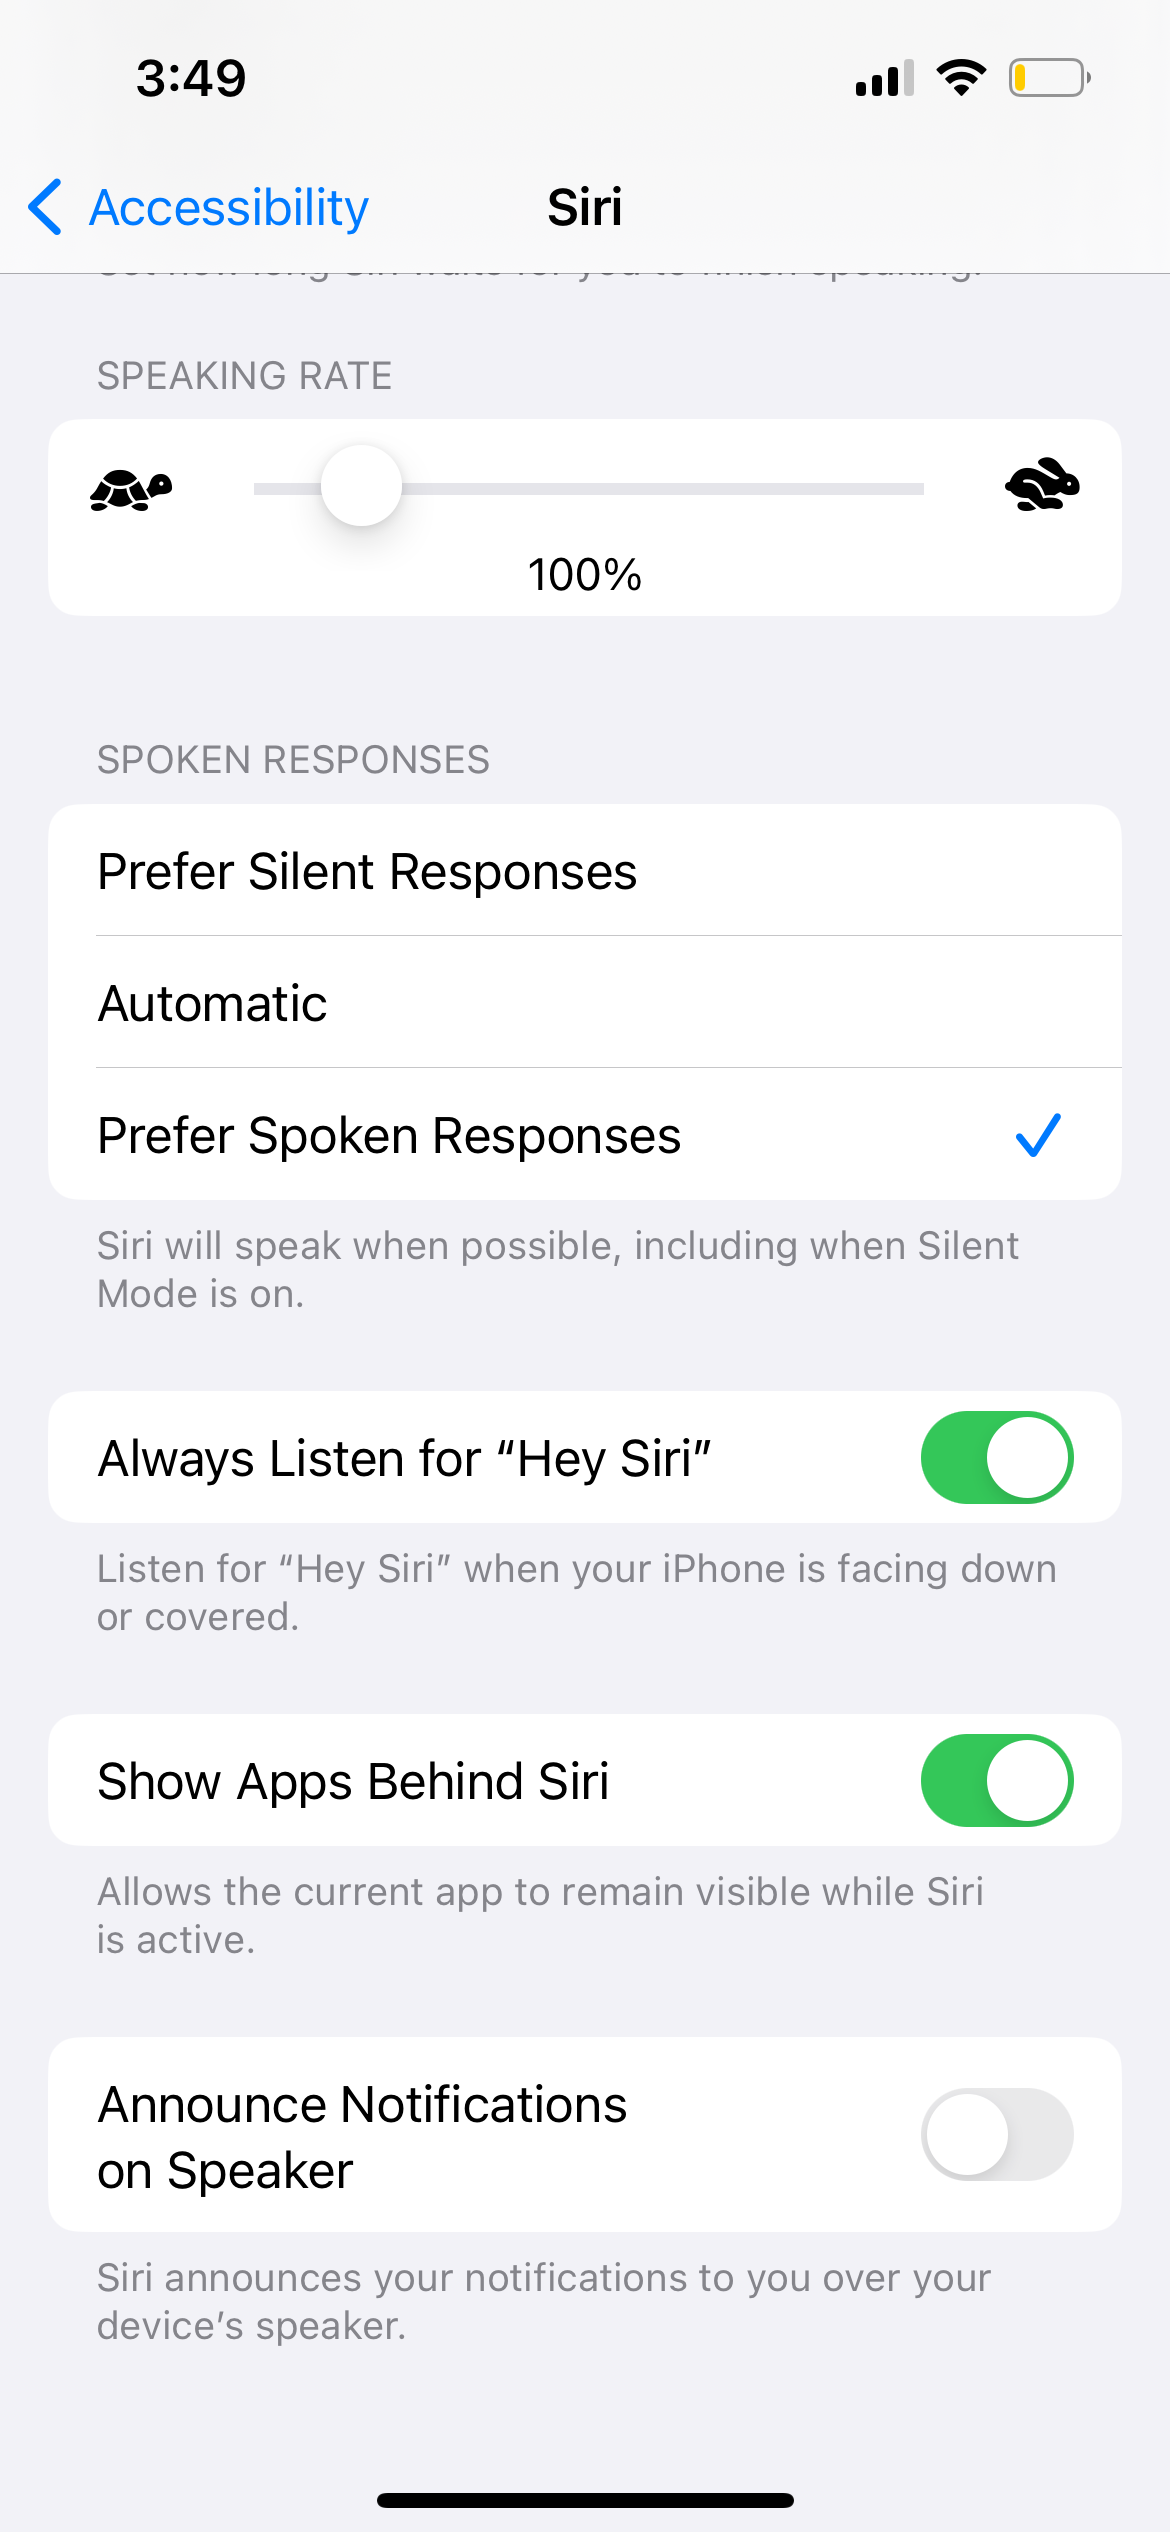 iphone siri settings in accessibility